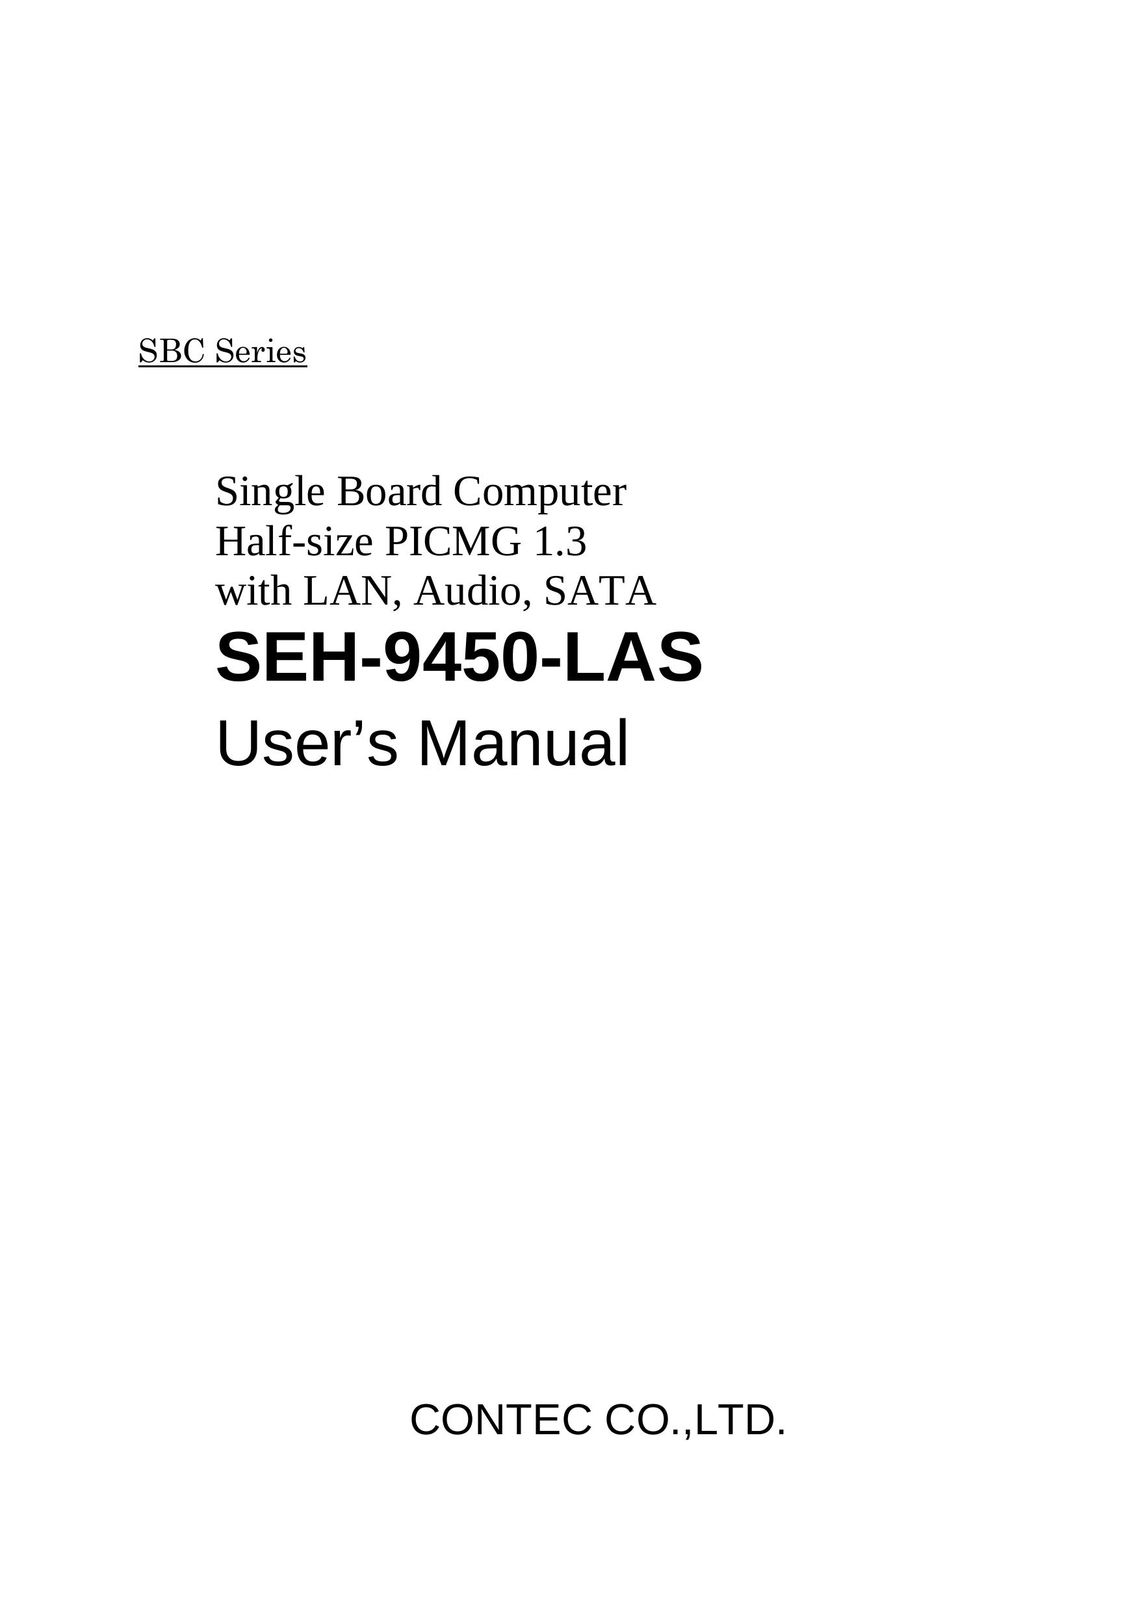 Contec SEH-9450-LAS Personal Computer User Manual